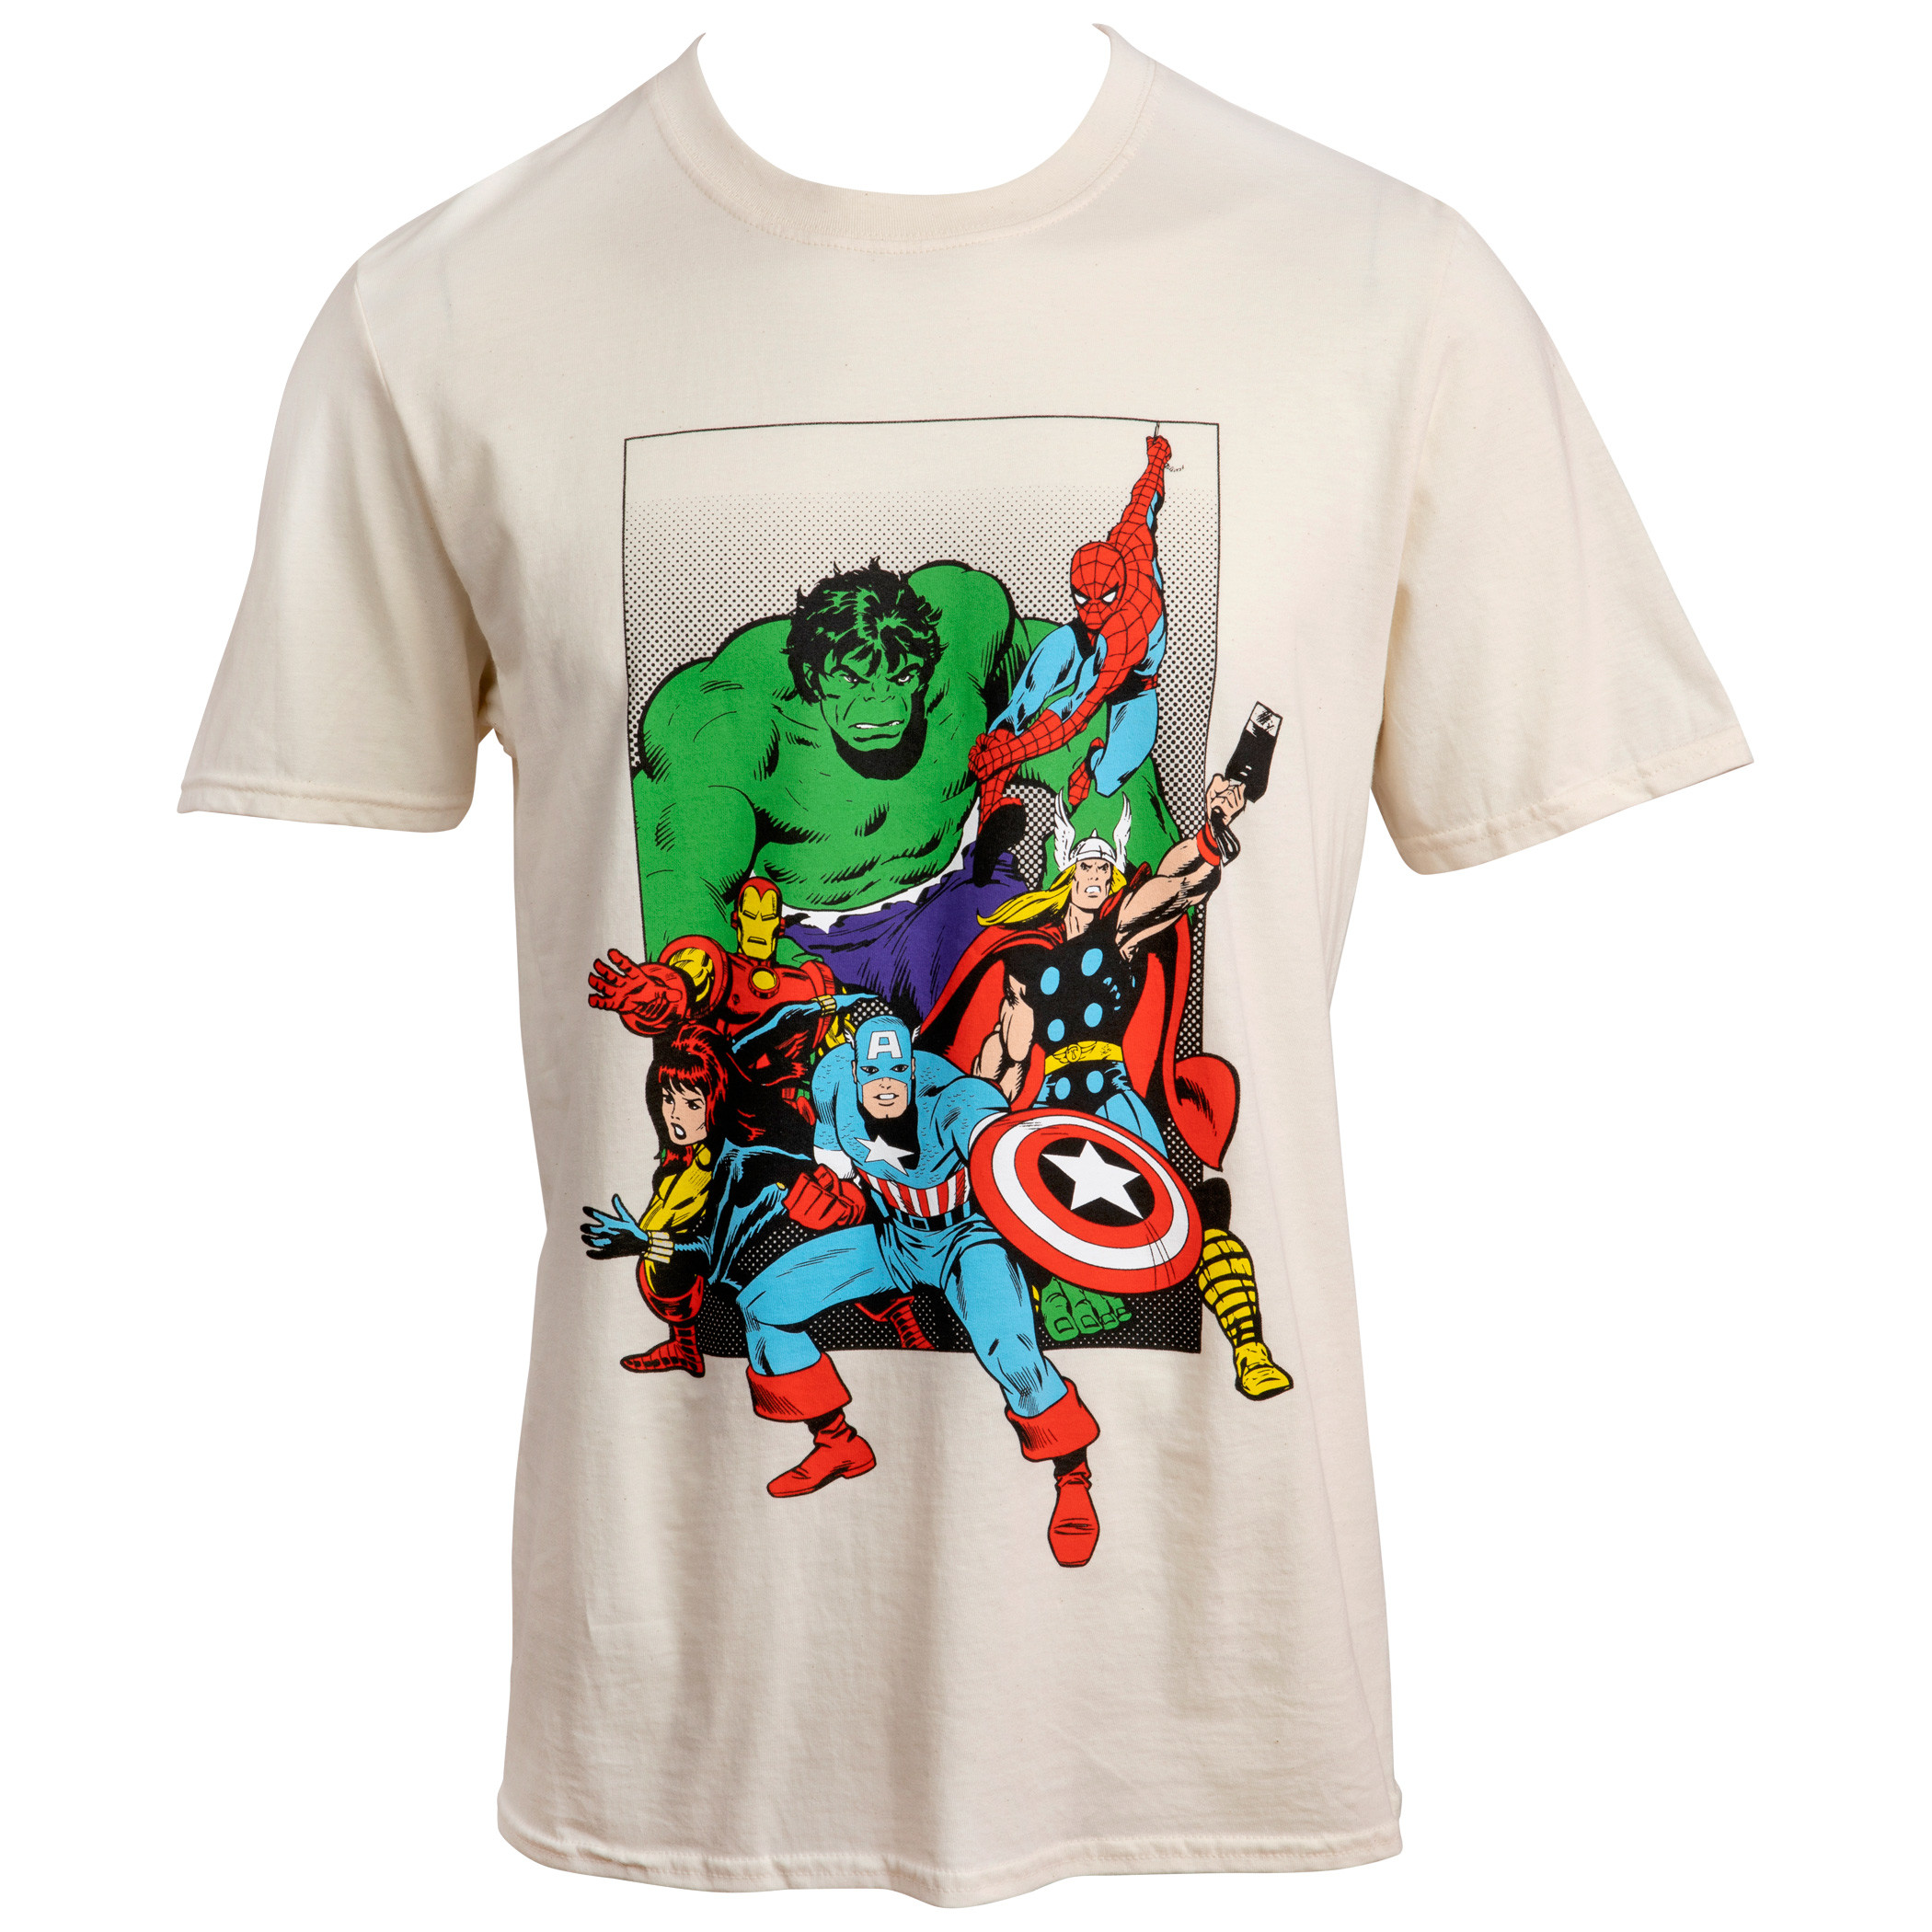 Marvel Comics The Avengers Group Stance T-Shirt